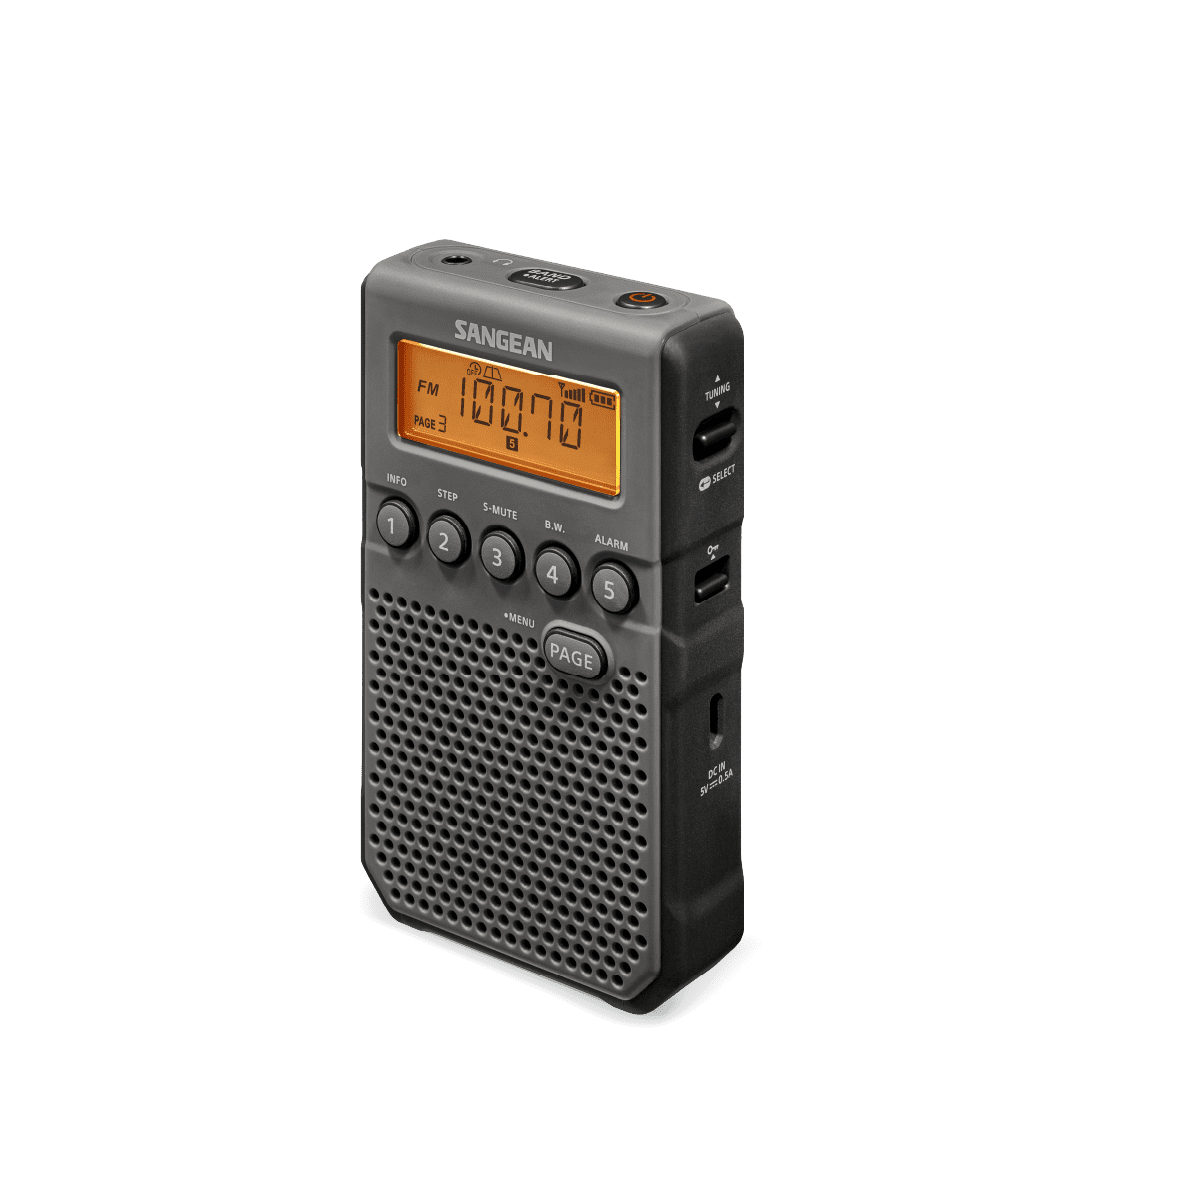 Sangean Portable AM/FM Radios, Black, PR-D12 